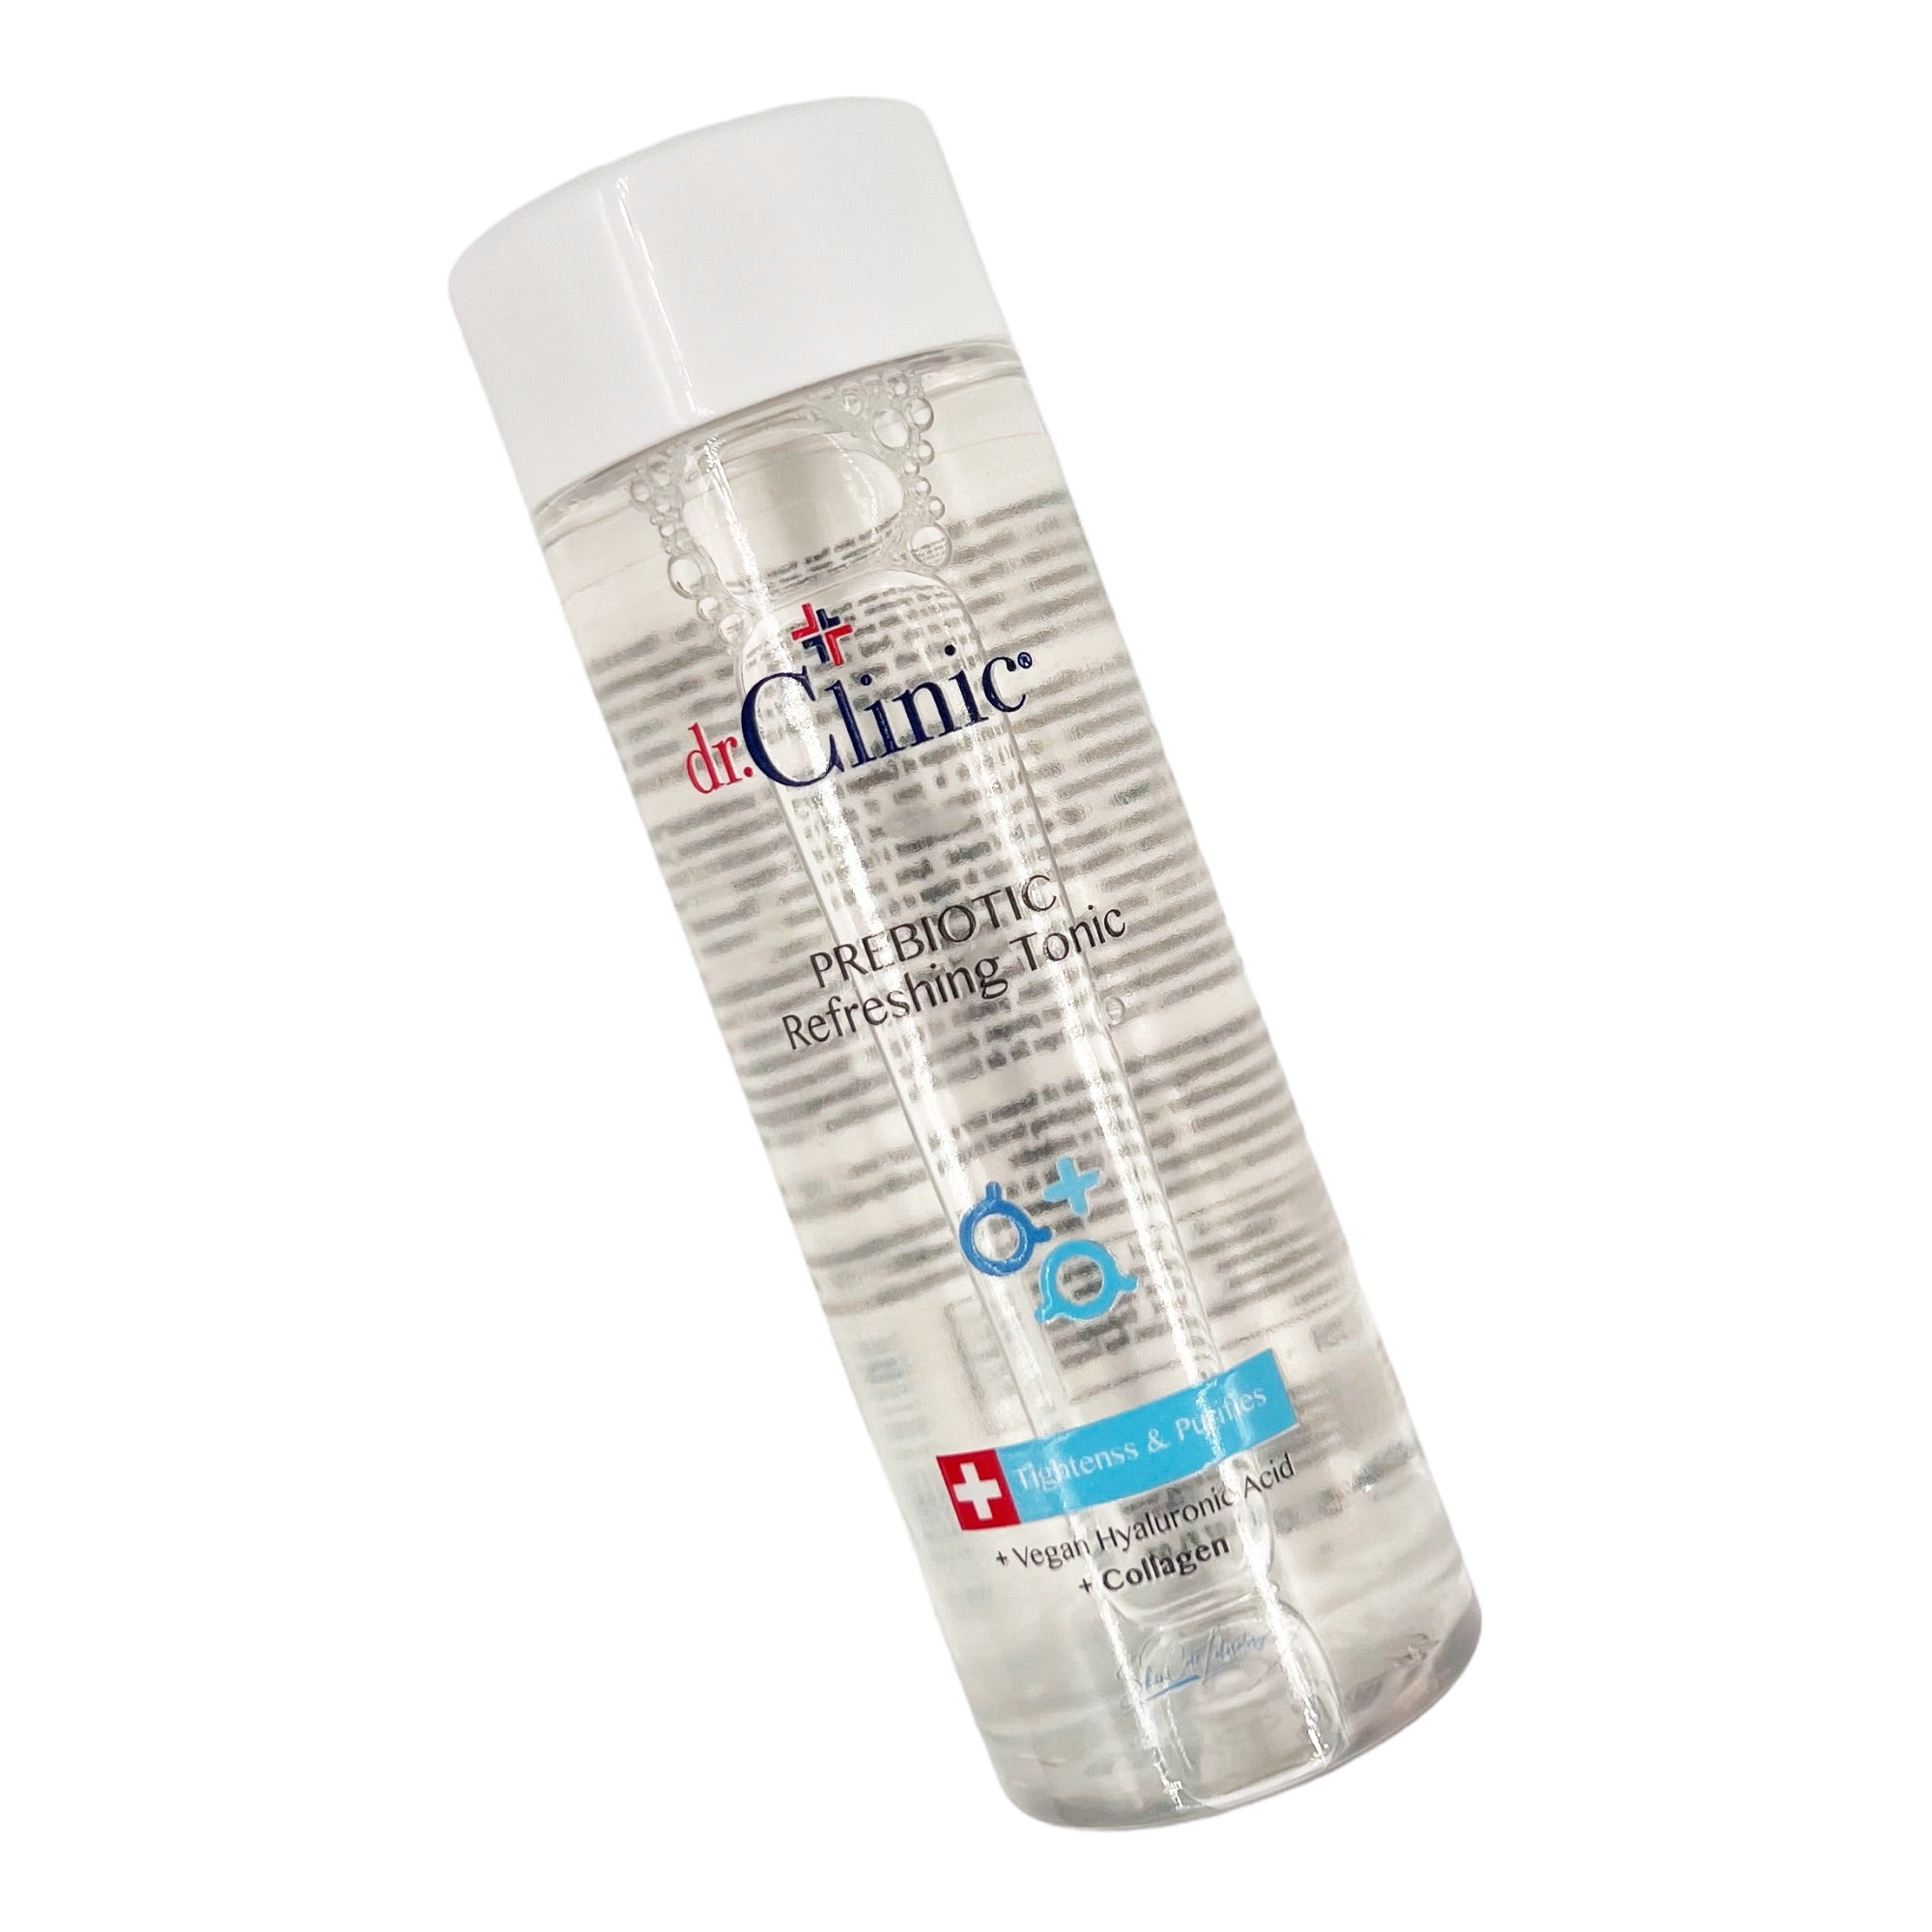 Dr.Clinic - Prebiotic Refreshing Tonic 150ml